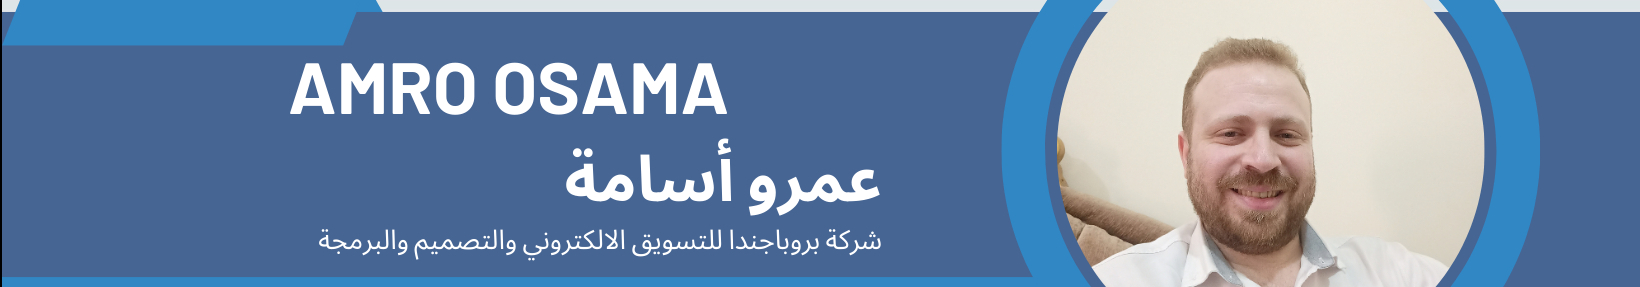 amro osama's profile banner